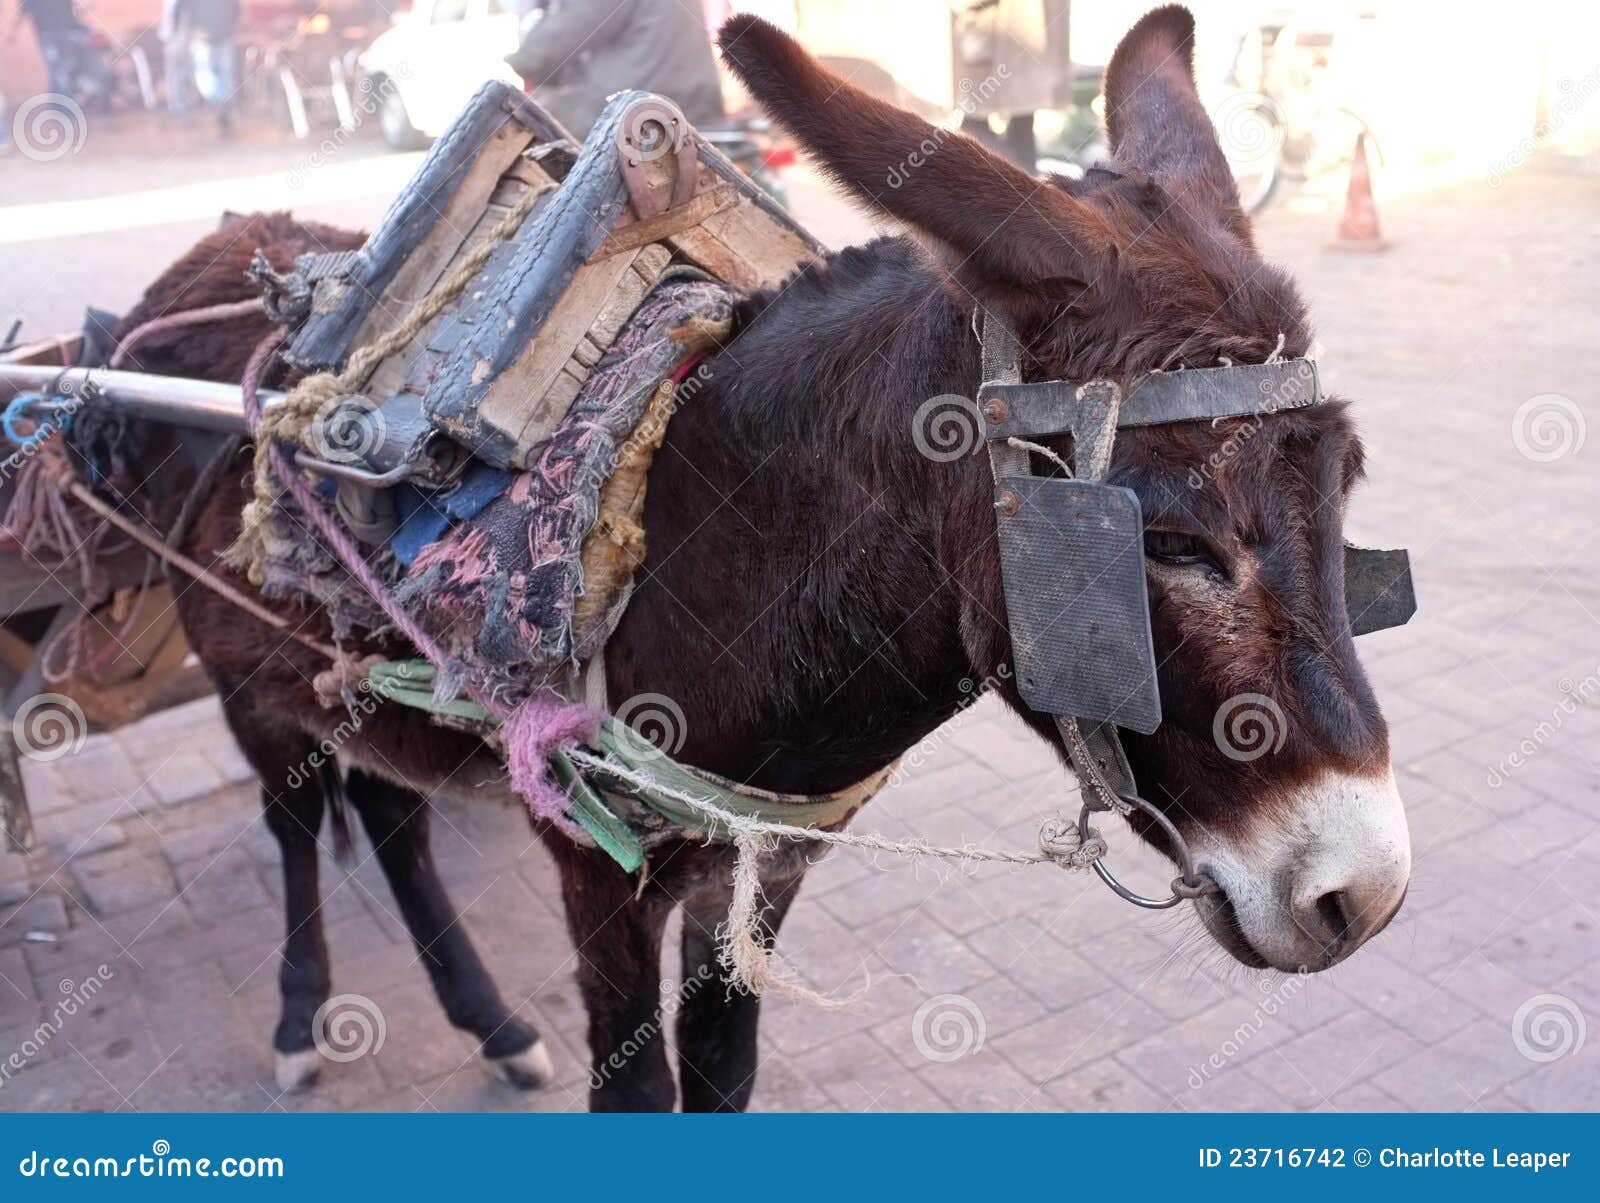 Image result for donkey blinkers